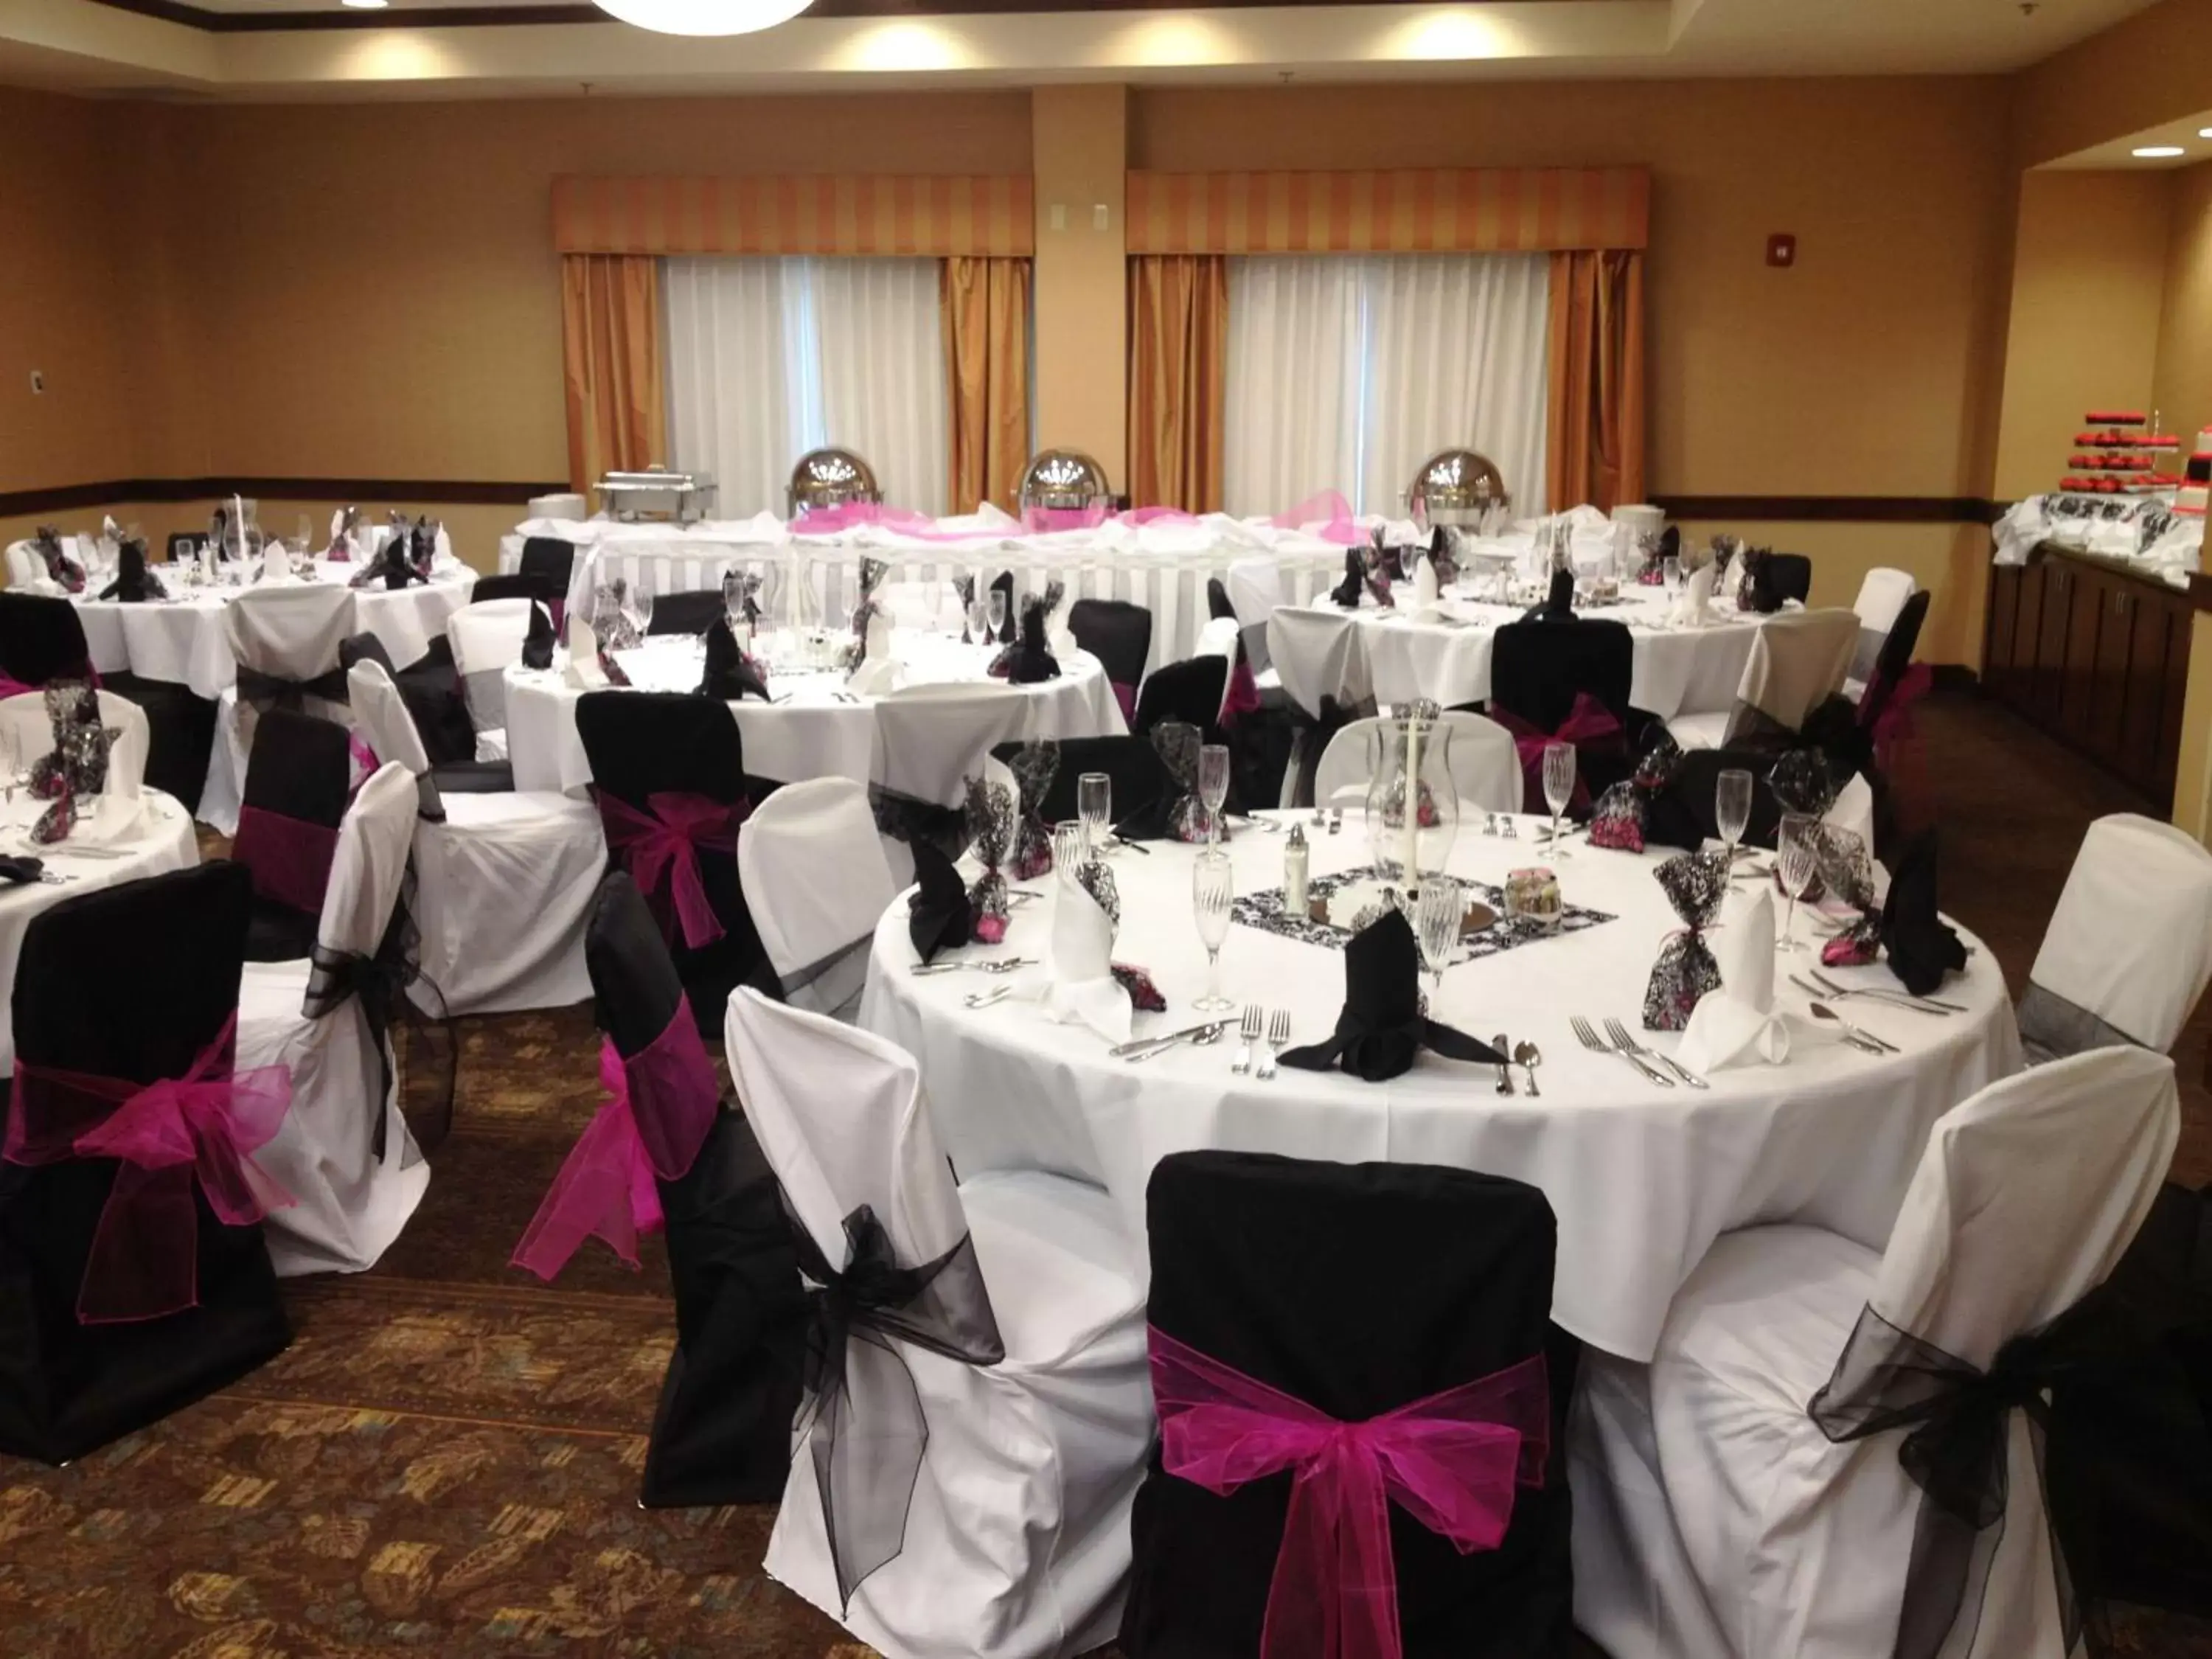 Meeting/conference room, Banquet Facilities in Hilton Garden Inn Billings